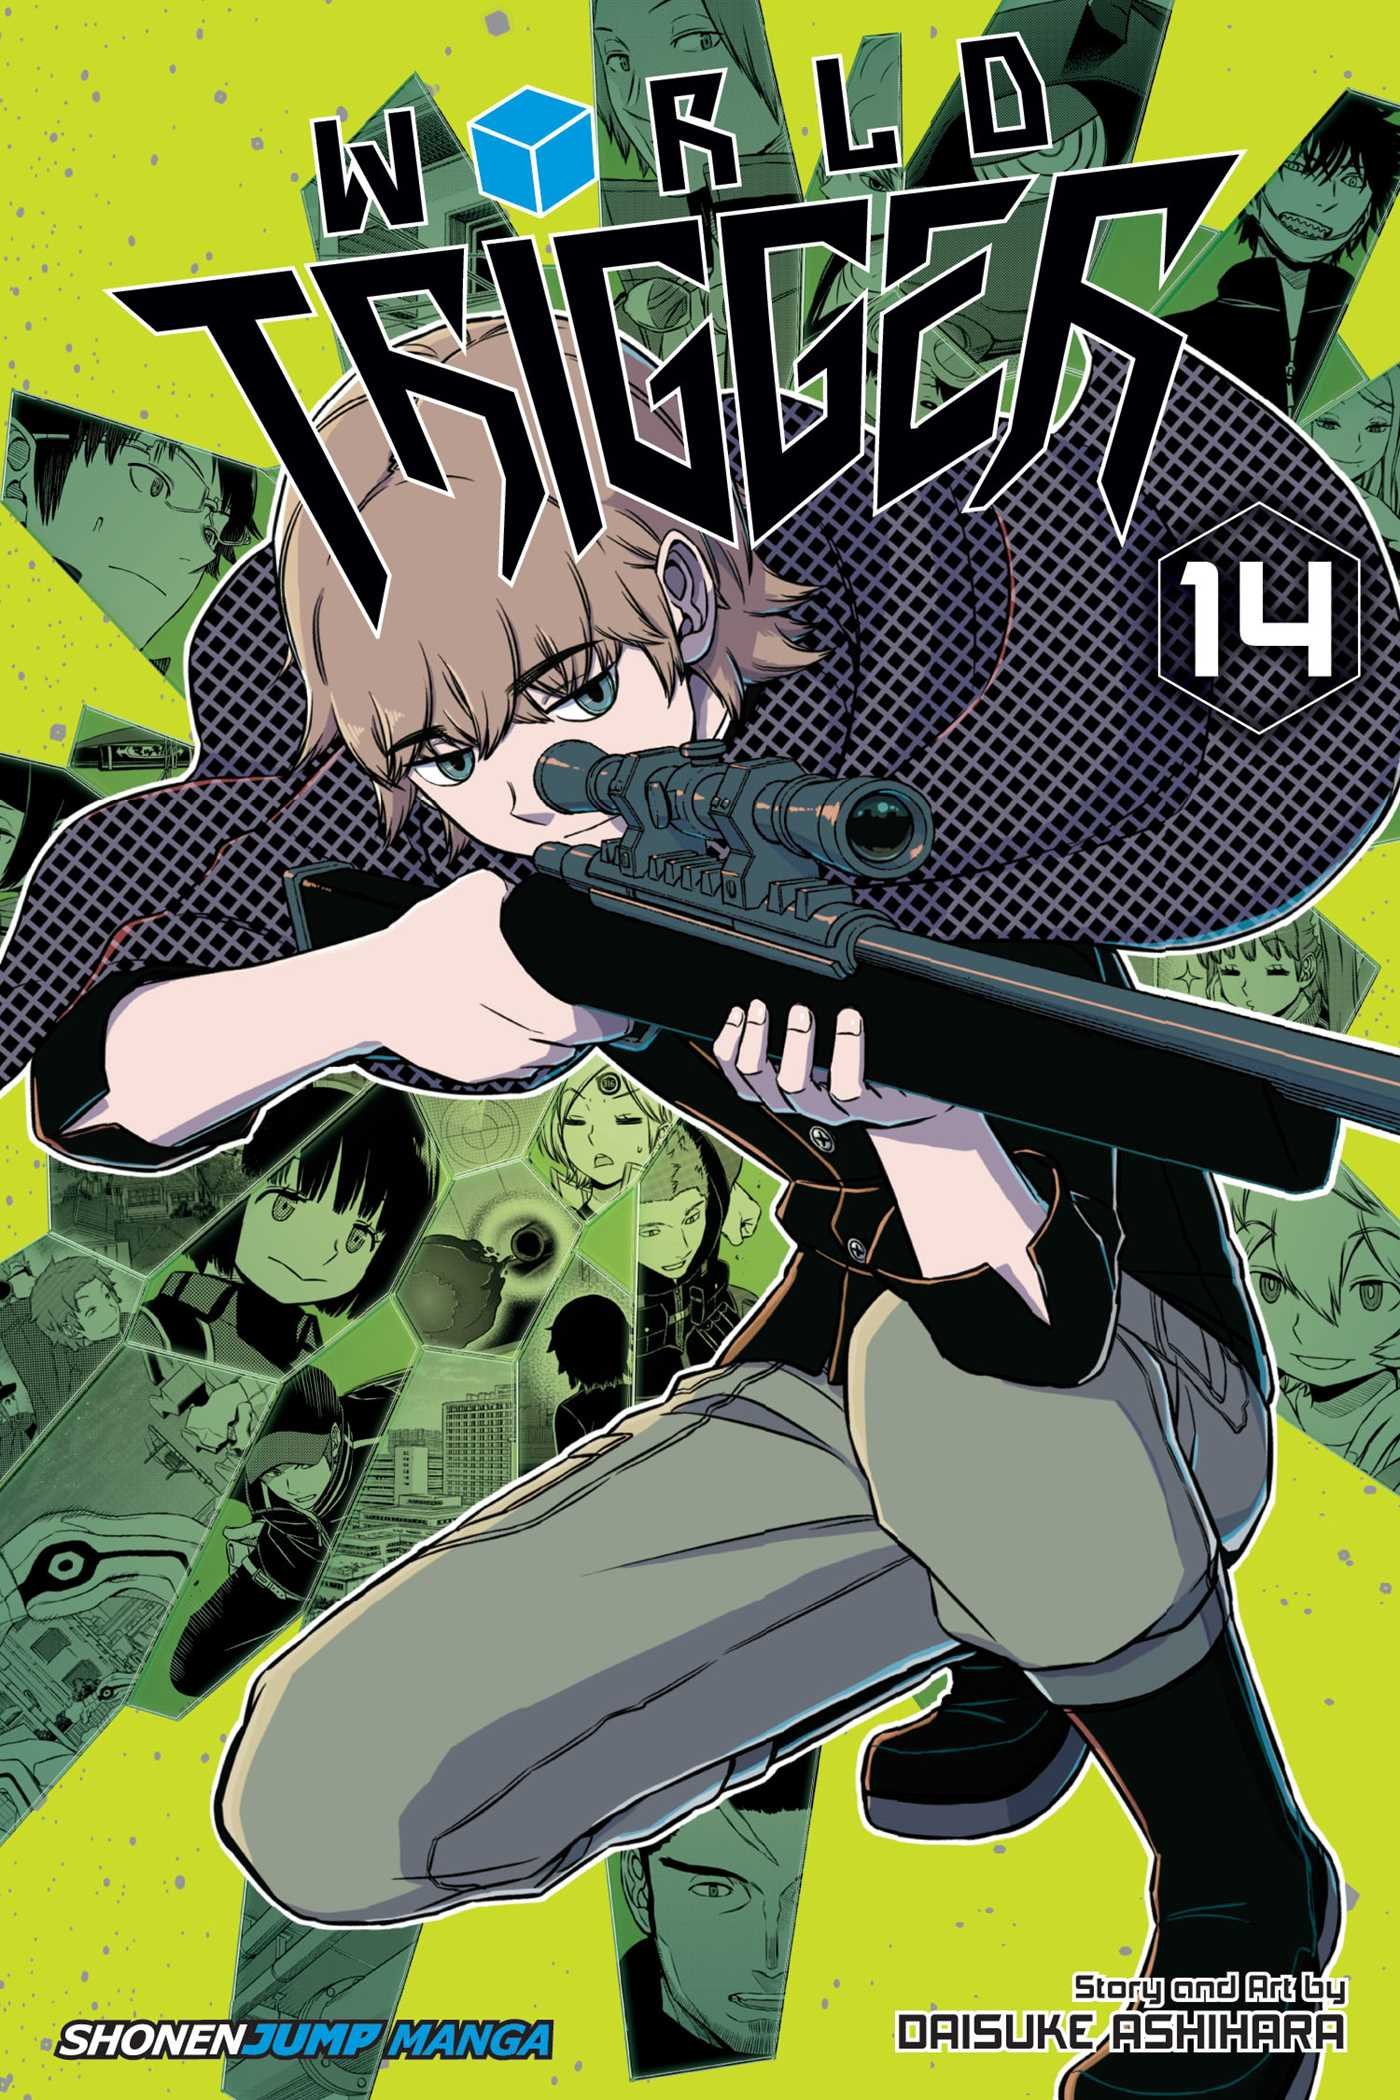 World Trigger - Volume 14 | Daisuke Ashihara